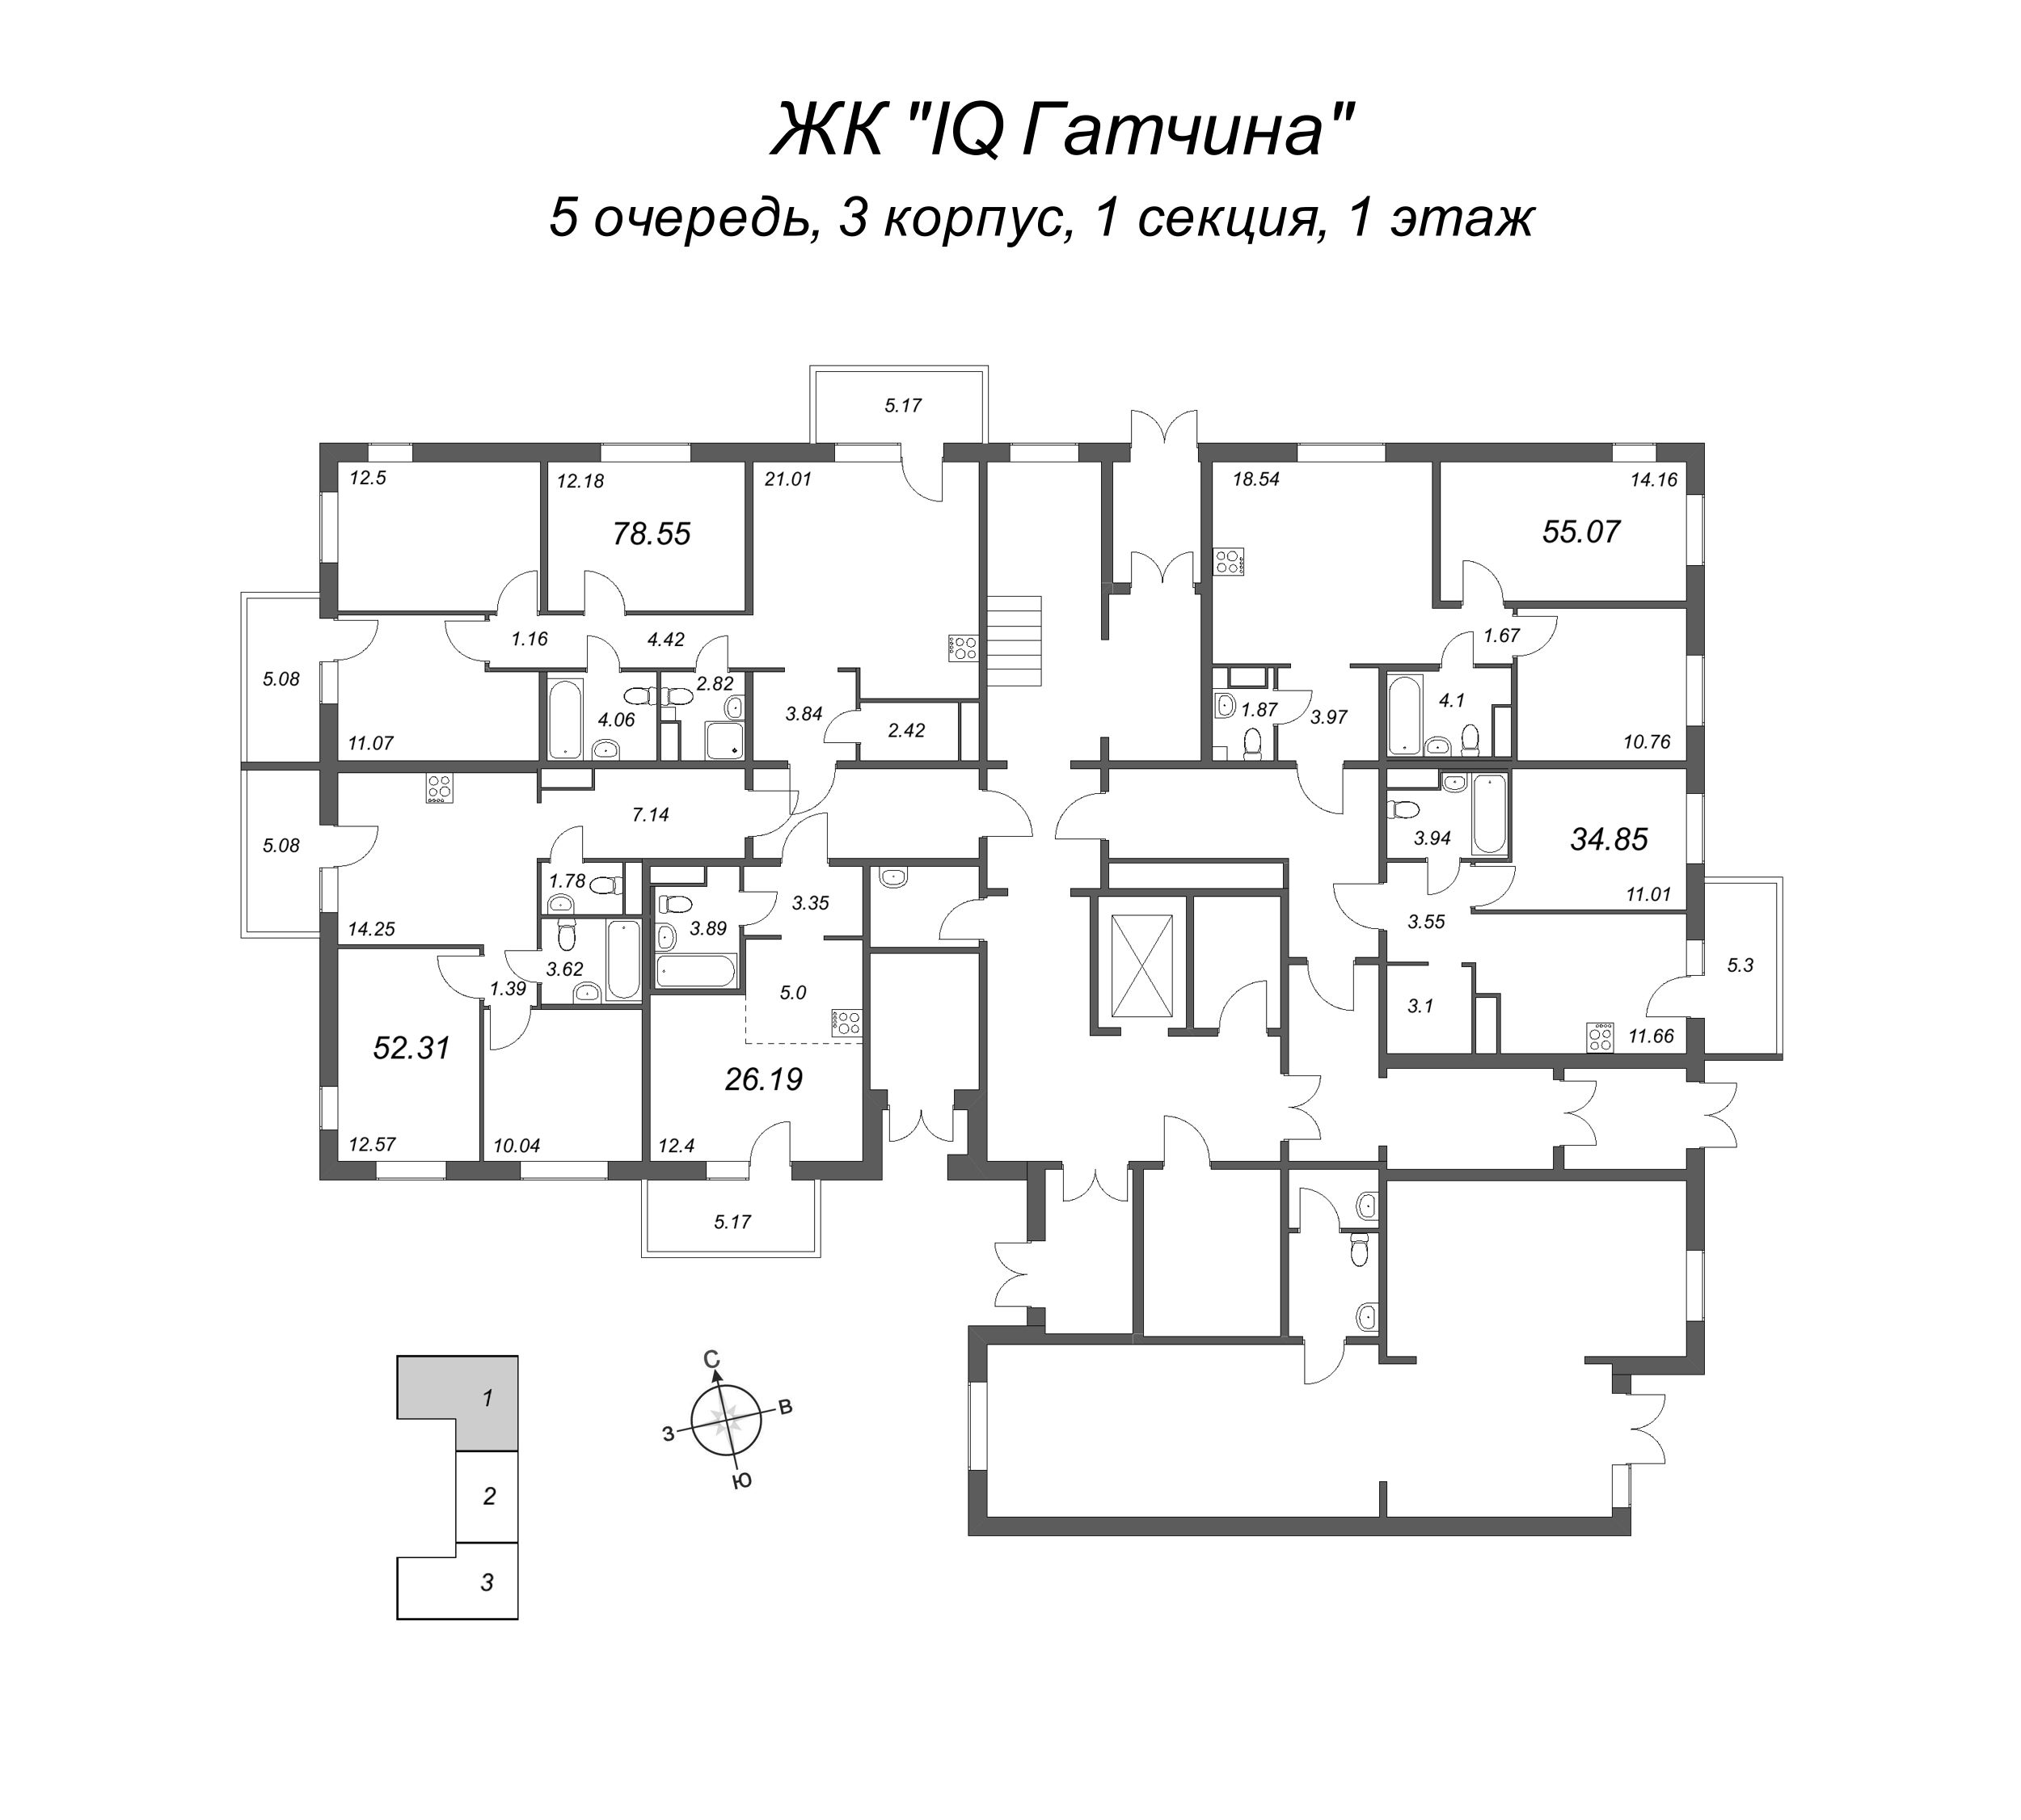 3-комнатная (Евро) квартира, 55.07 м² - планировка этажа